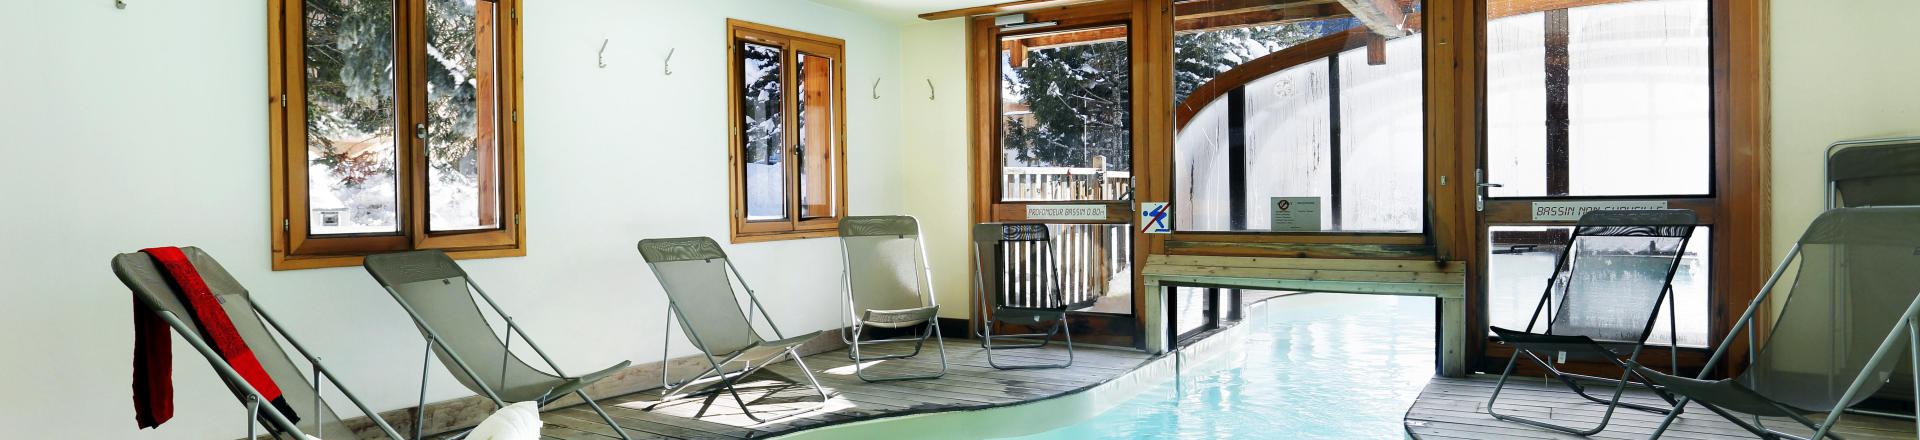 Rent in ski resort Résidence l'Adret - Serre Chevalier - Swimming pool